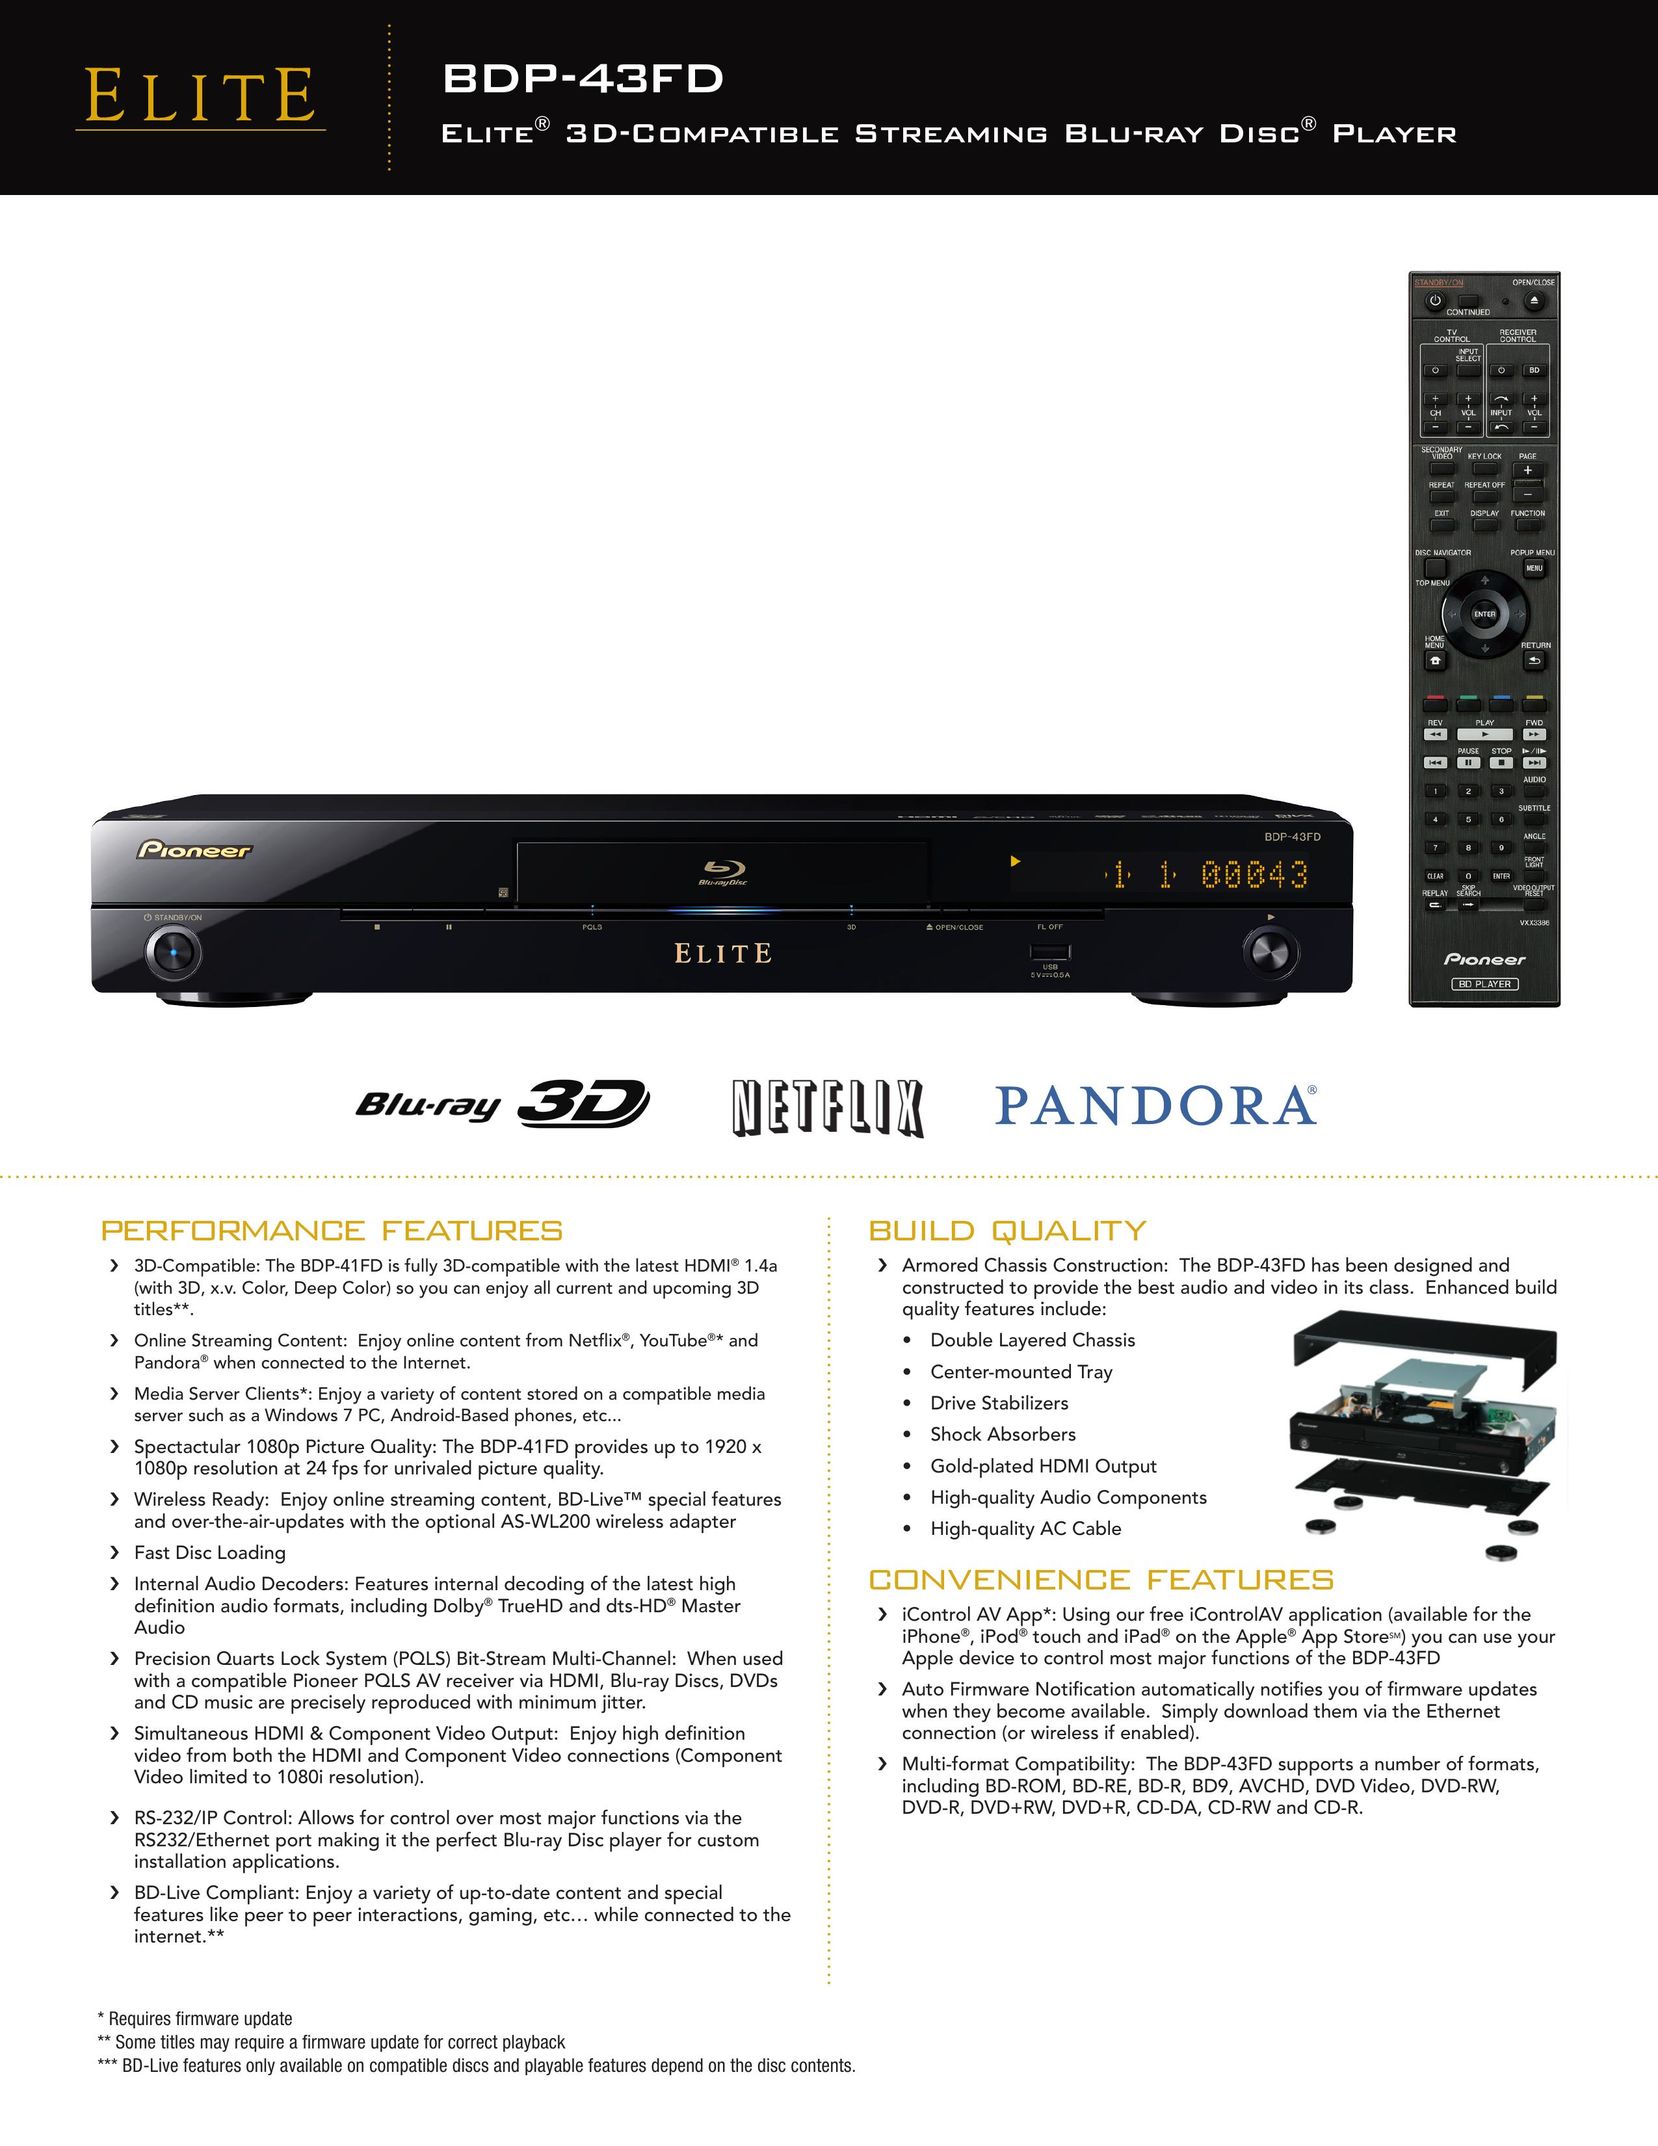 Pioneer BDP-43FD Blu-ray Player User Manual